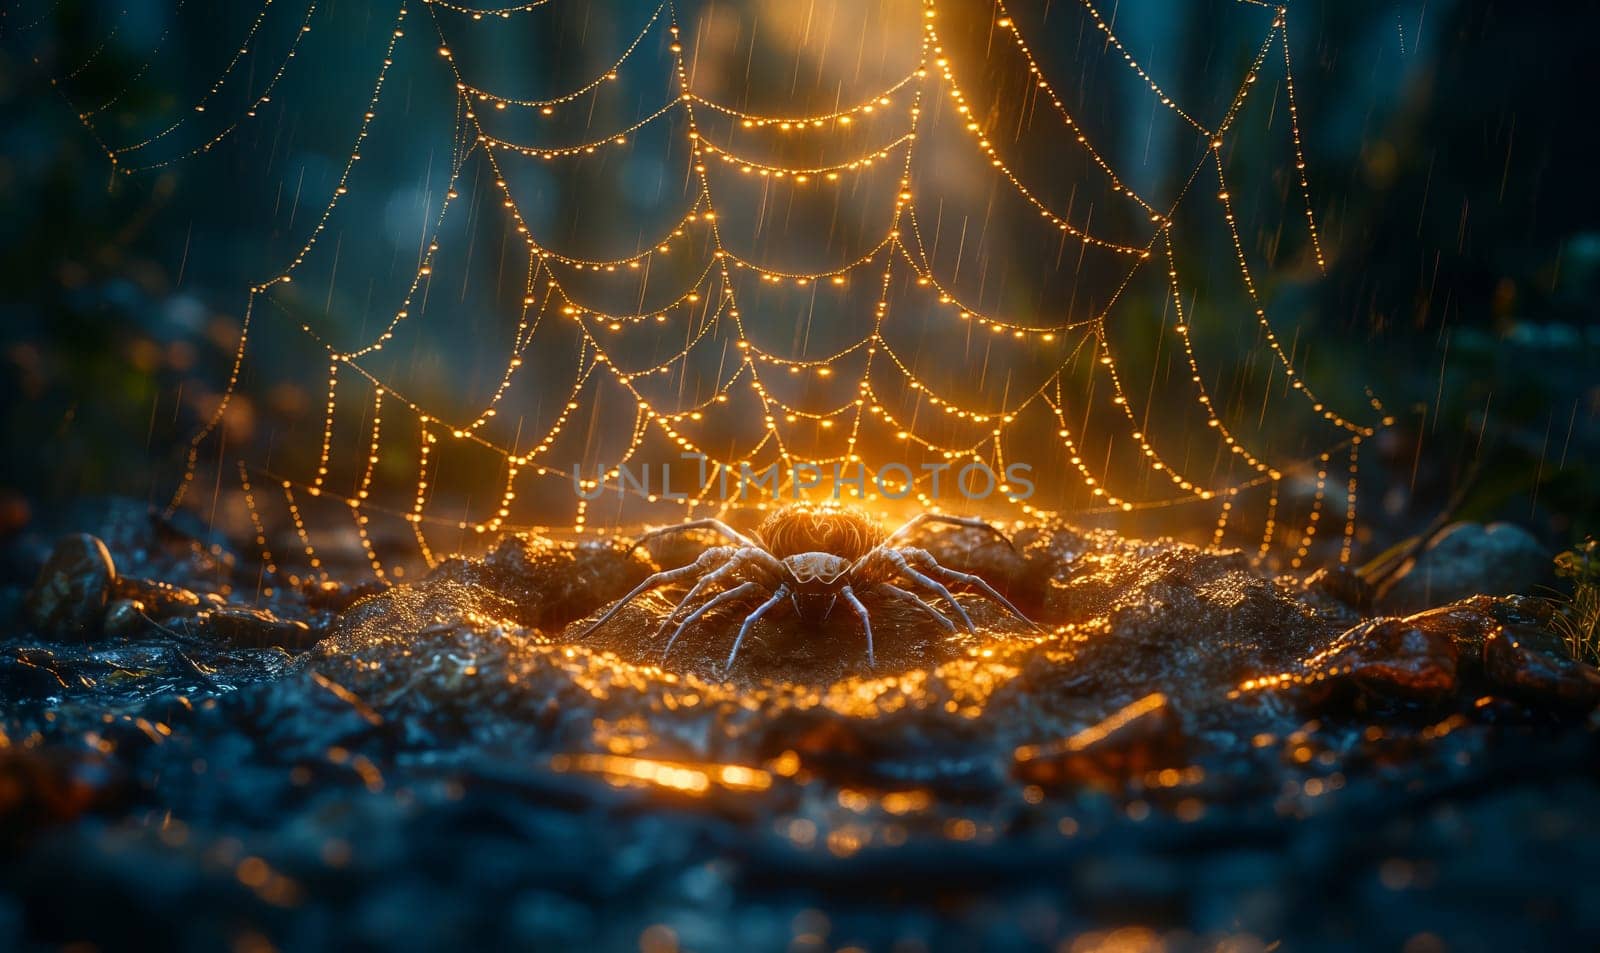 Dew Covered Spider Web Close Up. by Fischeron